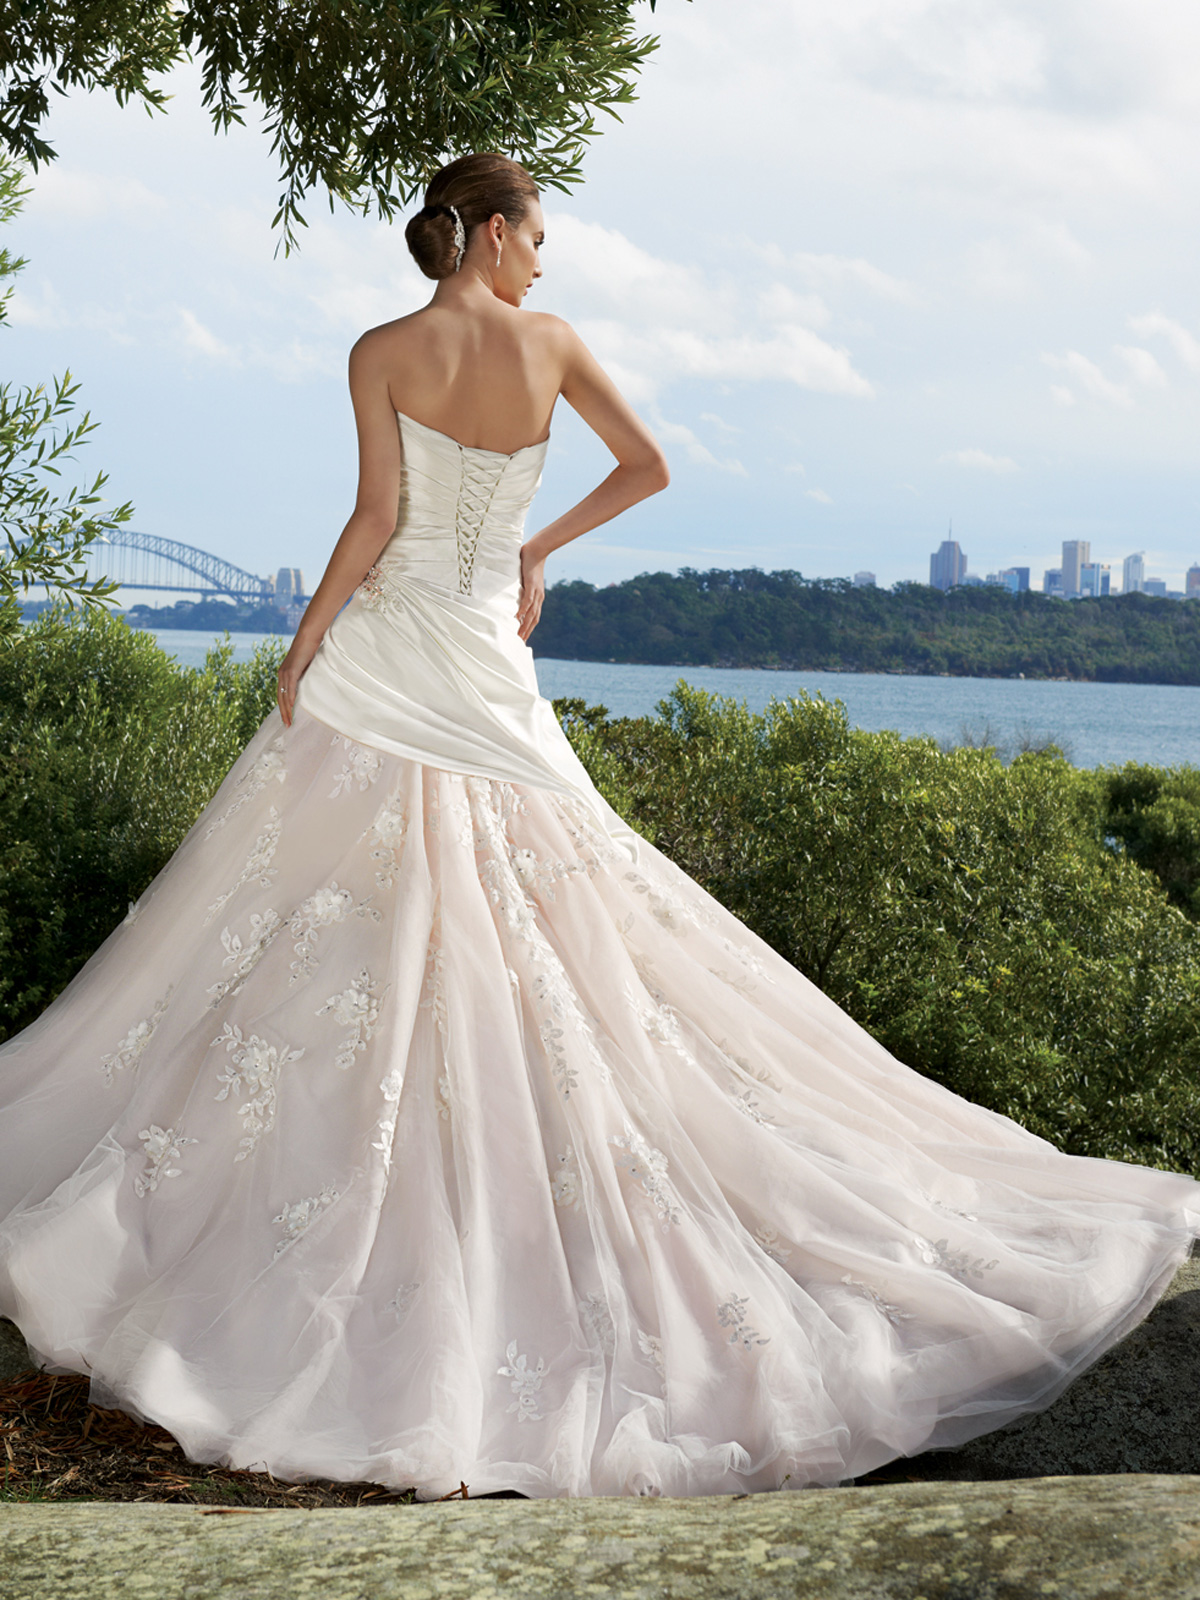 Sweetheart wedding dress with lace motifs